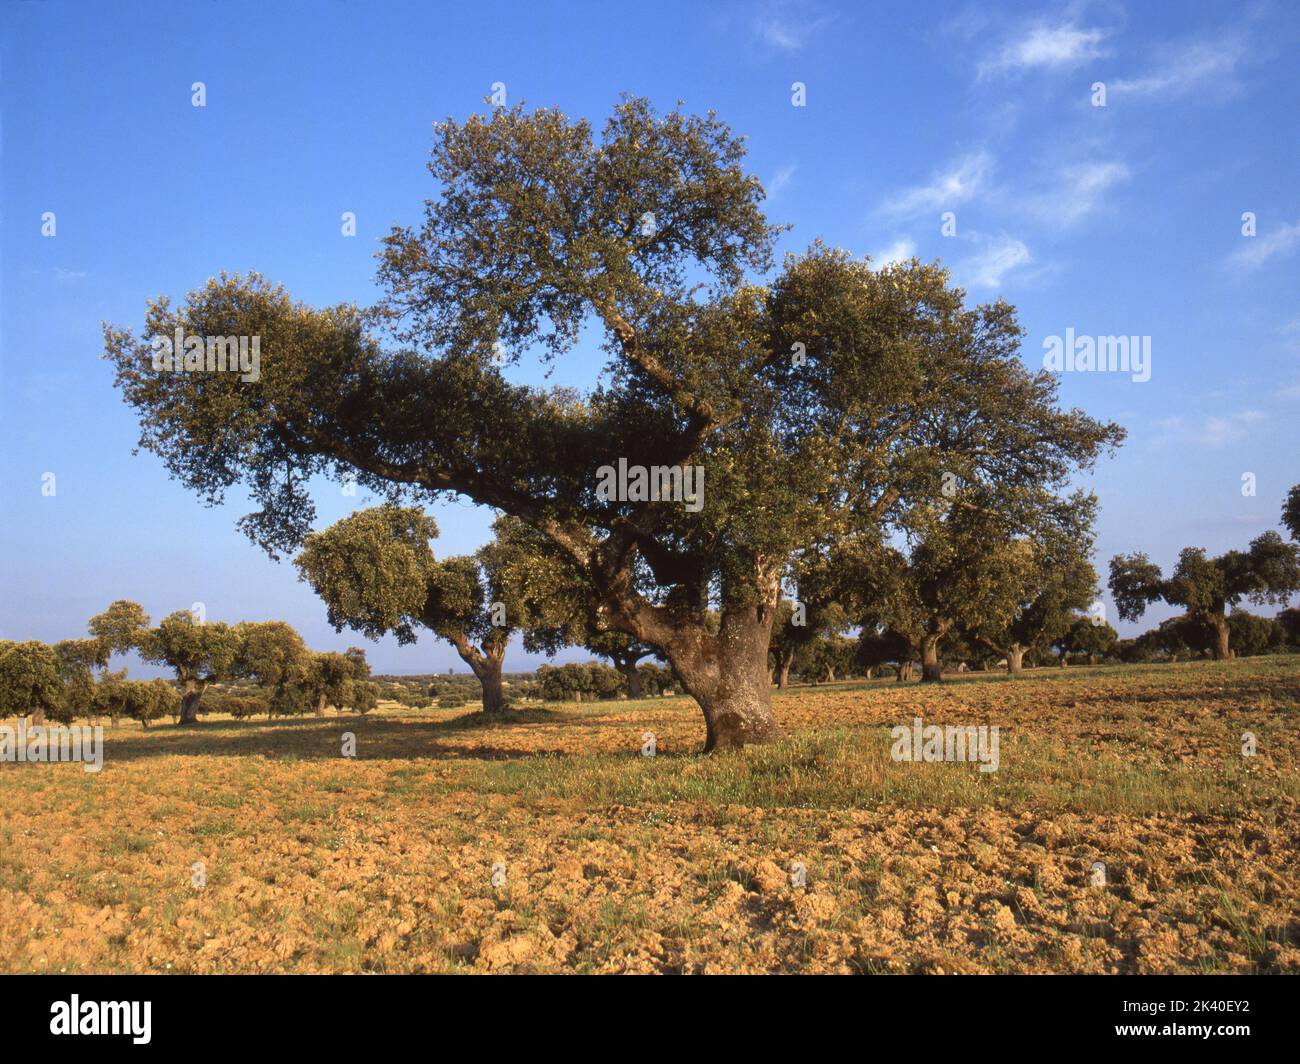 Chêne de Holm, chêne d'Evergreen, chêne de Holly, chêne d'Evergreen (Quercus ilex), prairie avec chênes de Stockholm , Espagne, Estrémadure Banque D'Images